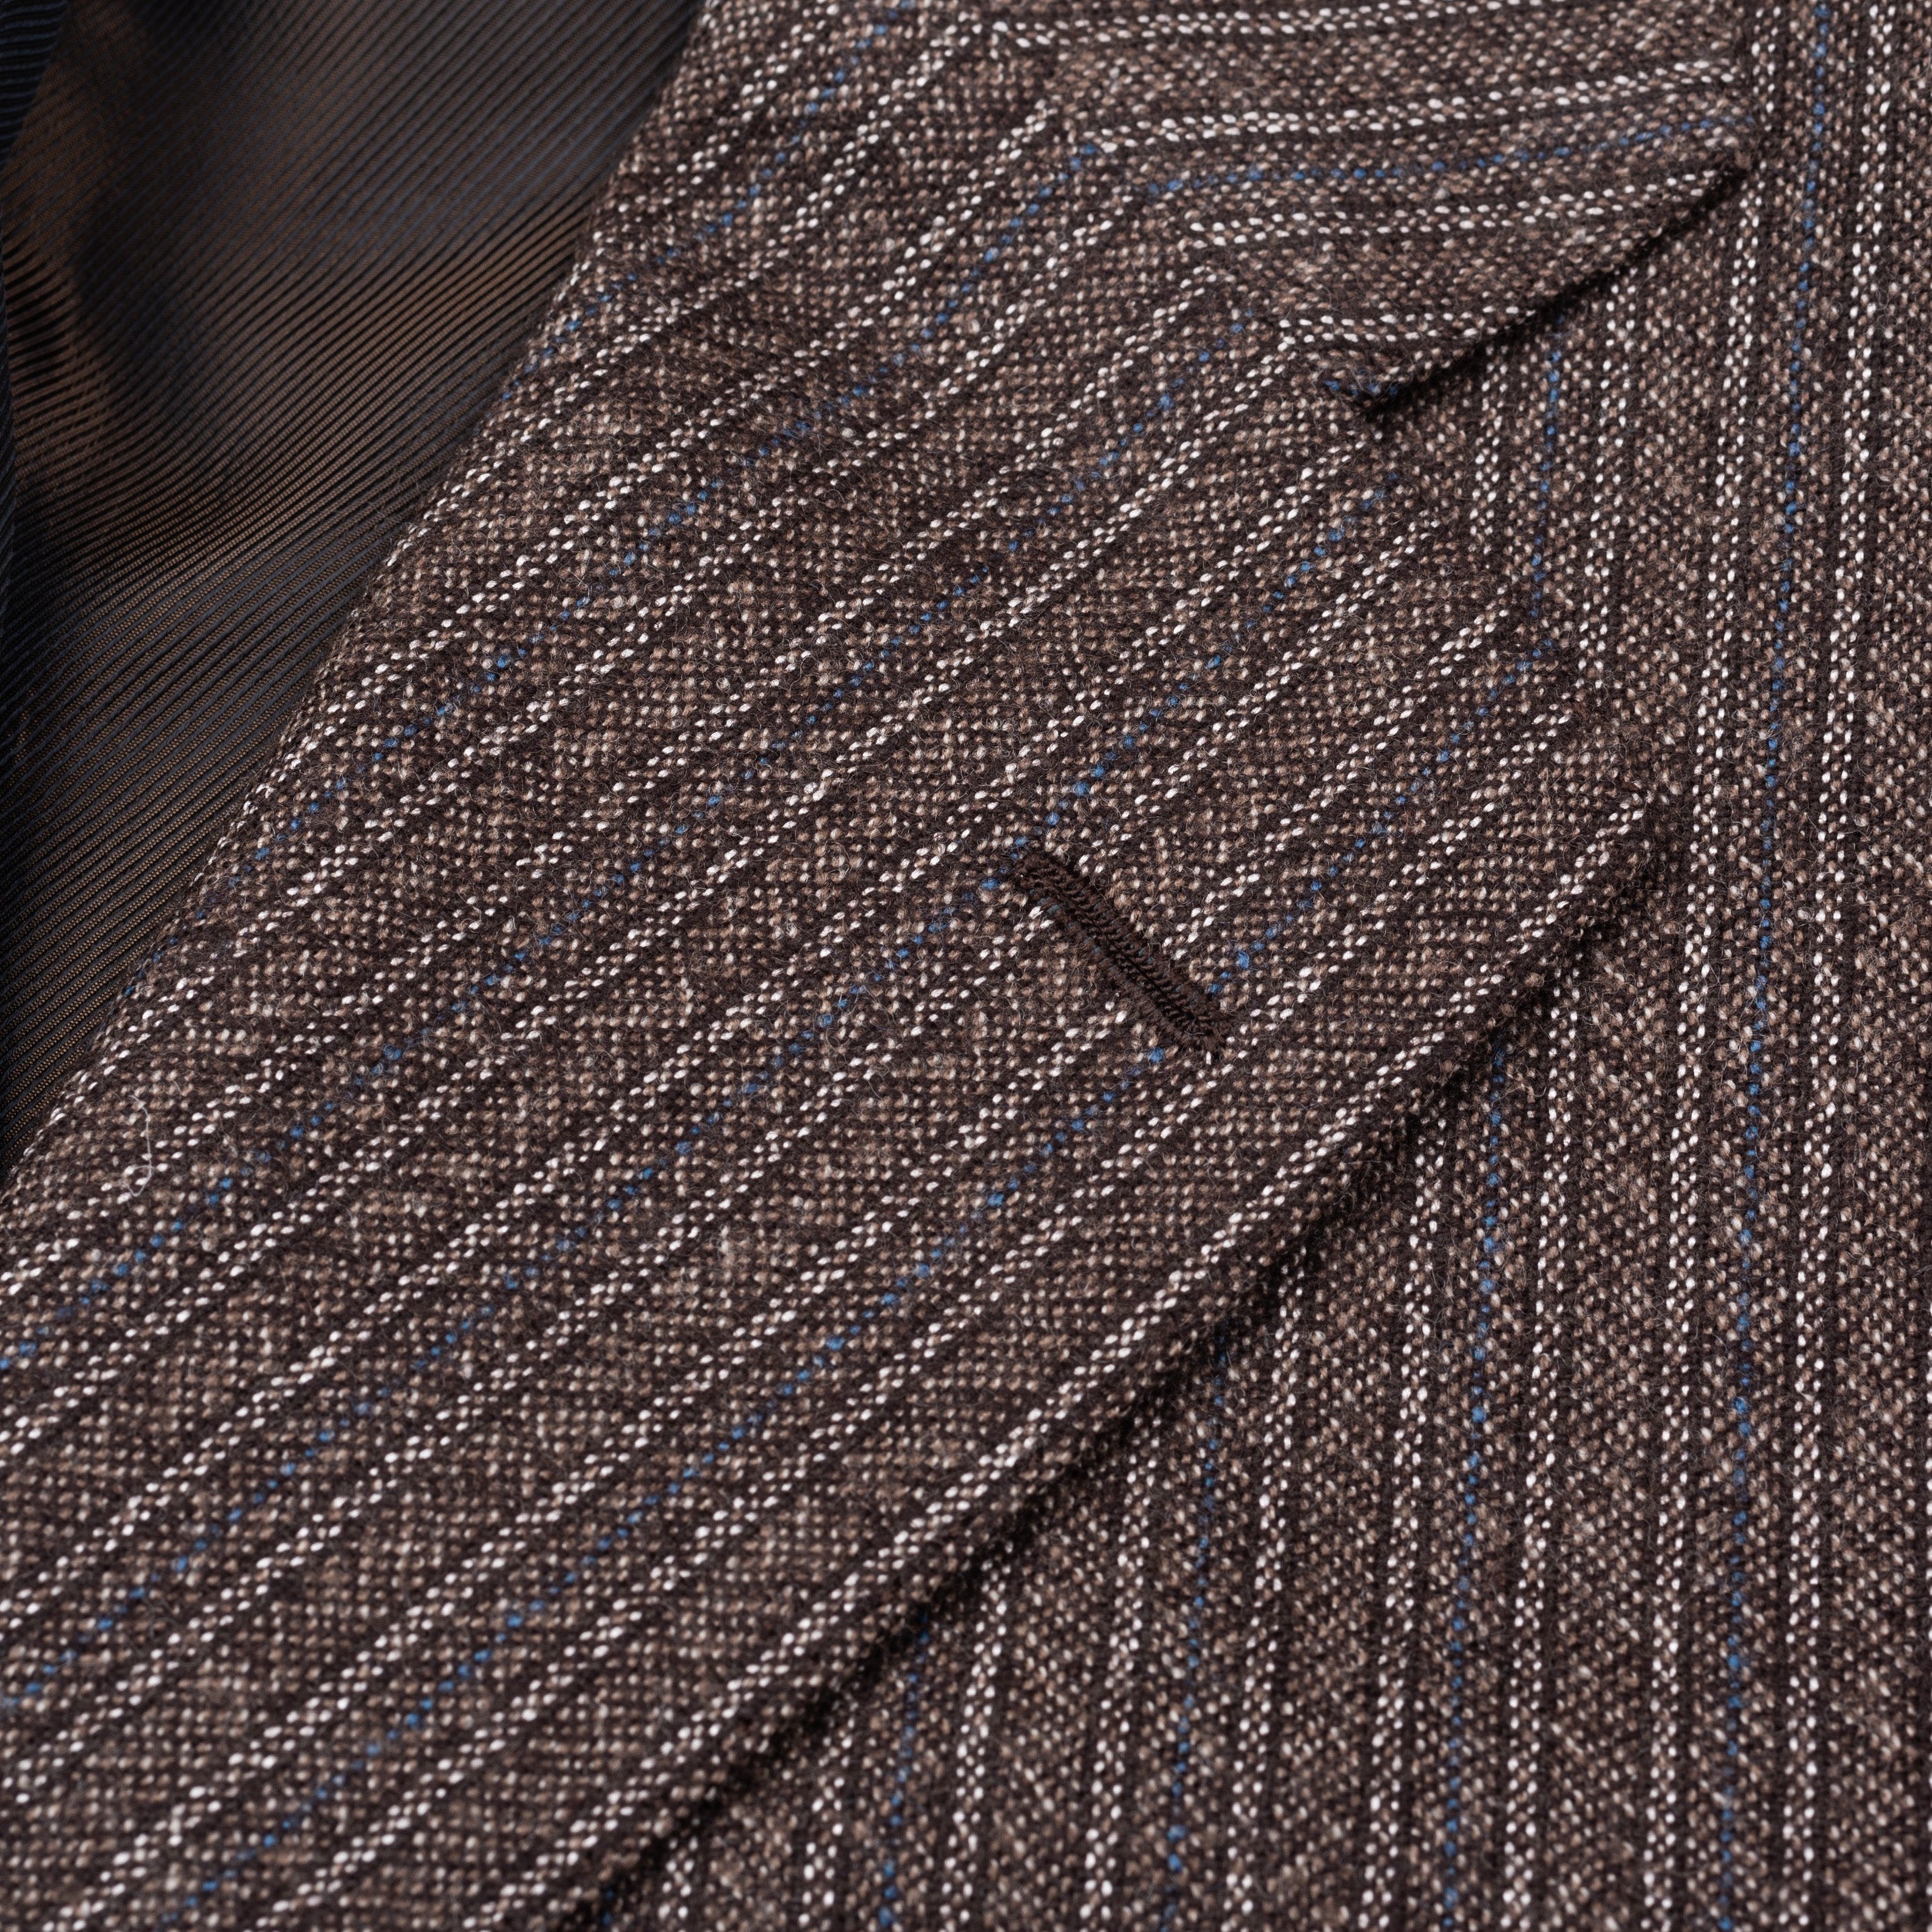 CESARE ATTOLINI Napoli Handmade Brown Striped Wool Suit EU 52 NEW US 42 CESARE ATTOLINI